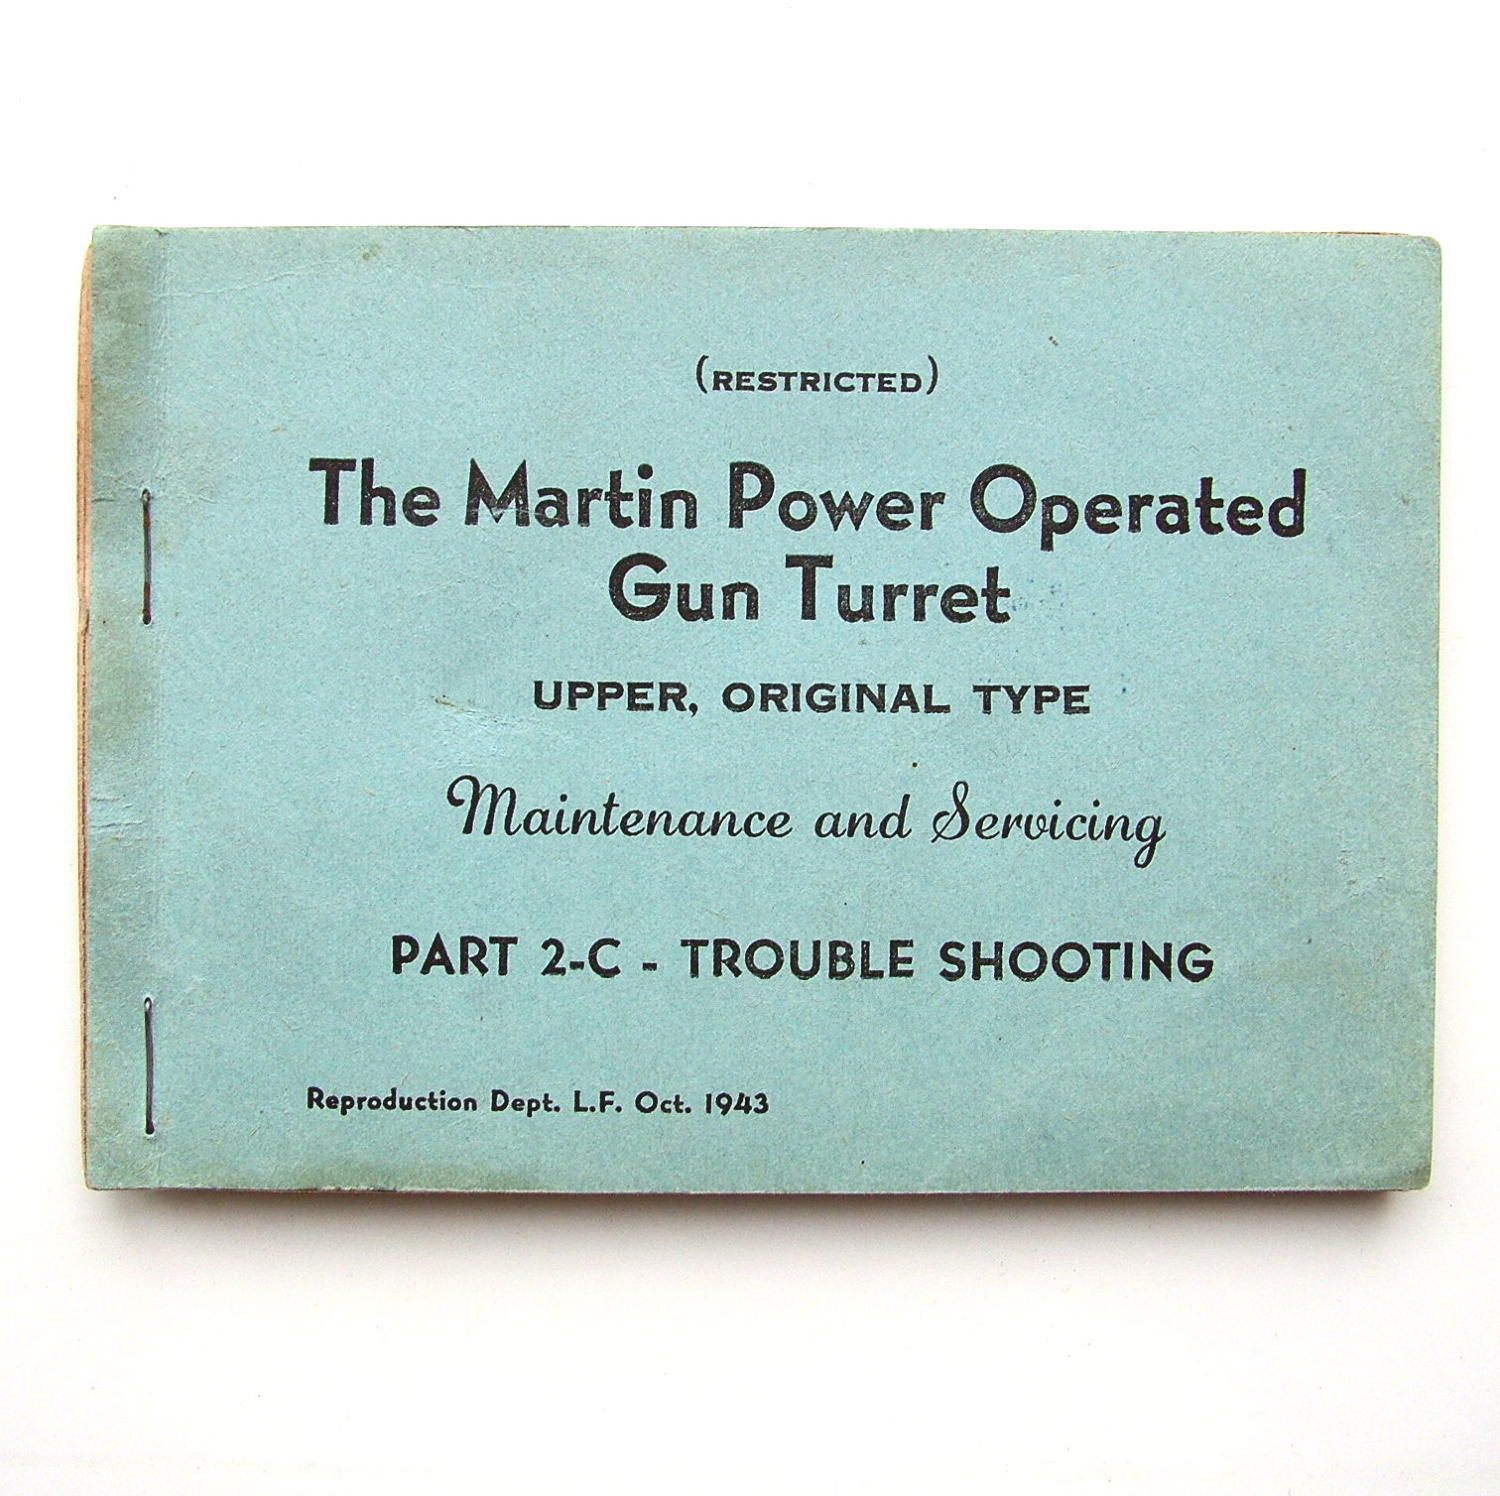 The Martin power operated gun turret manual